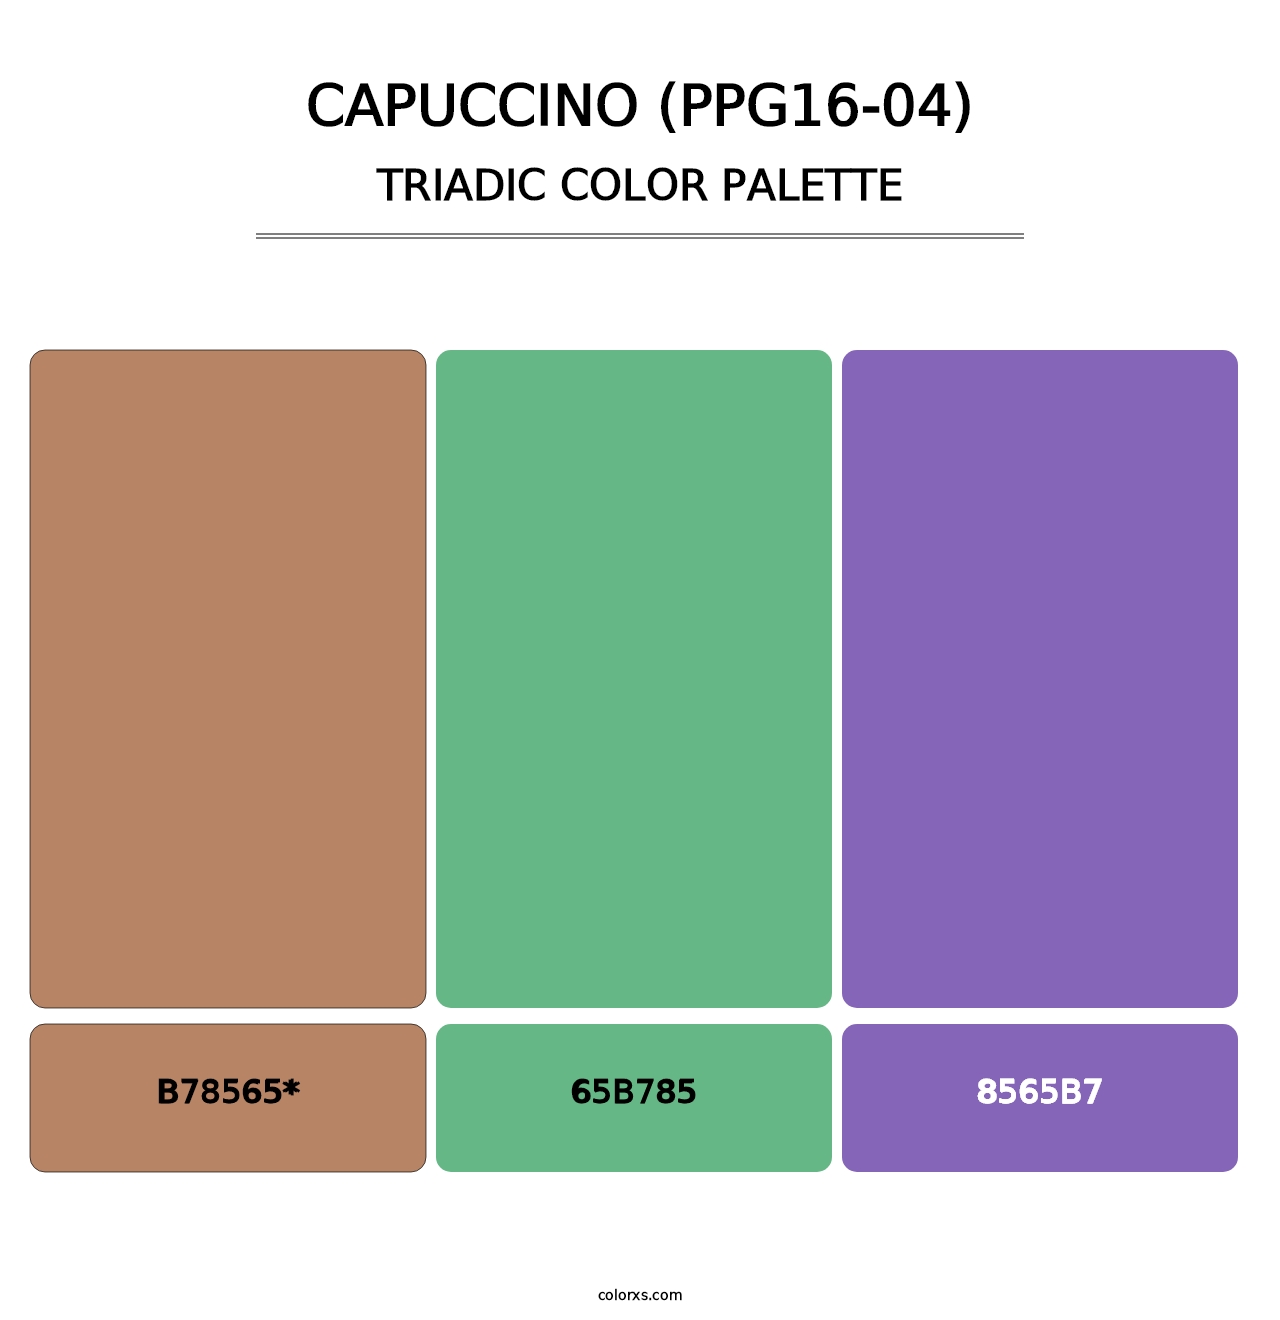 Capuccino (PPG16-04) - Triadic Color Palette